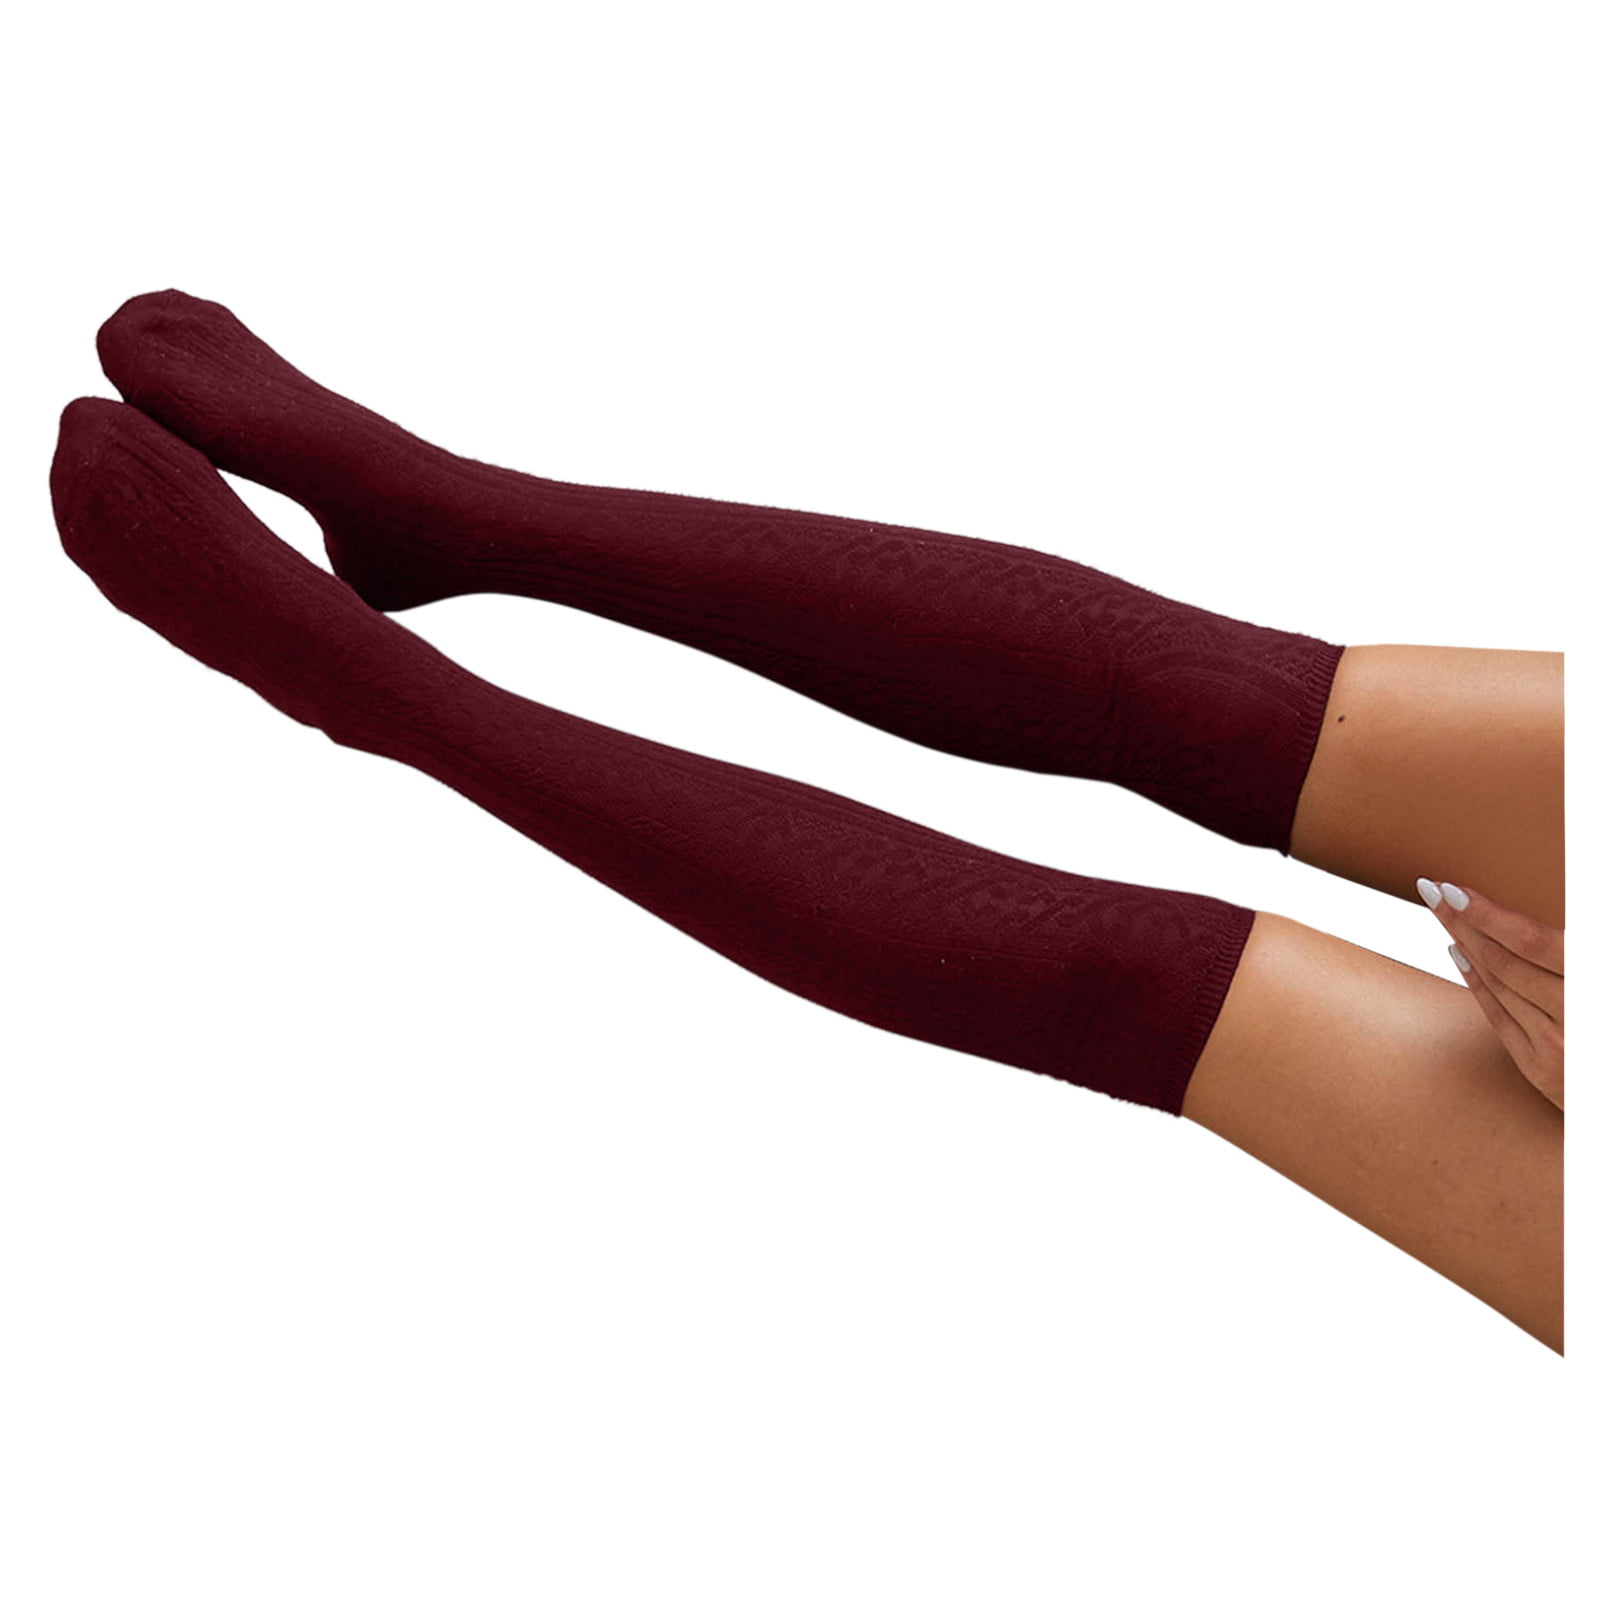 Gaowen Women Thick Cotton Warm Socks Thigh High Elastic Athletic Long Simple Leisure Stockings 